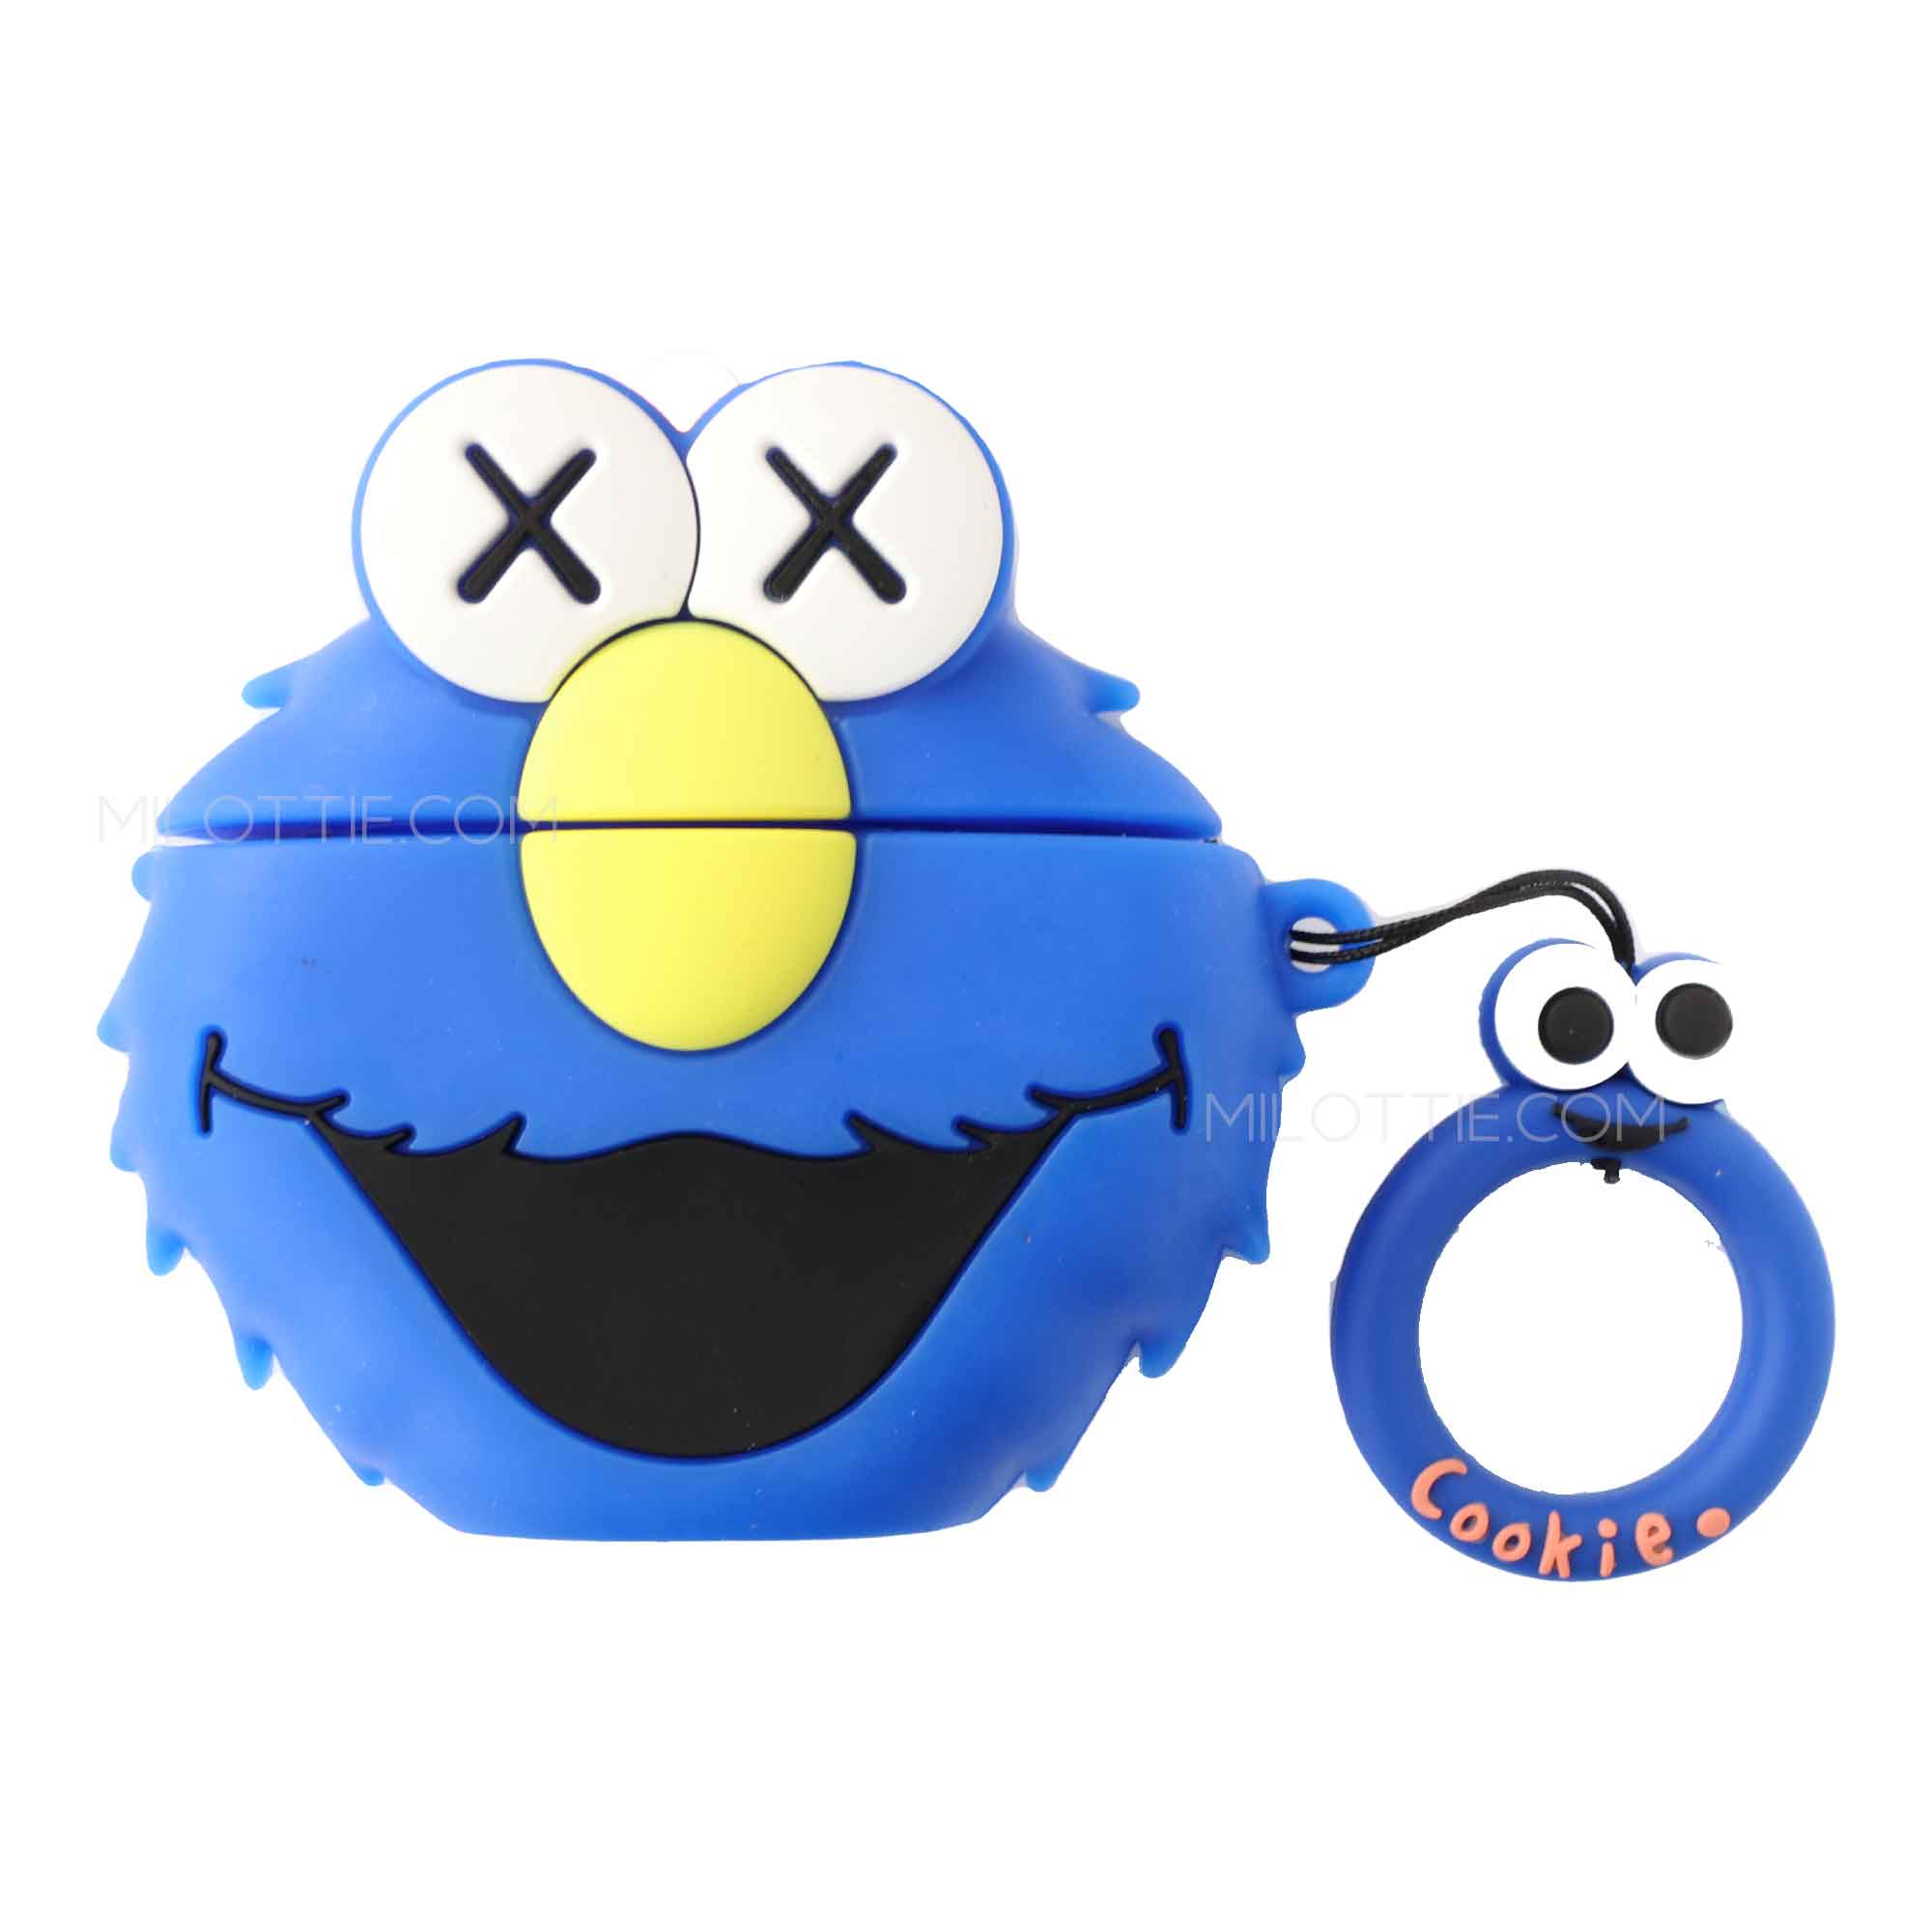 Cookie Monster kaws AirPods case - Milottie